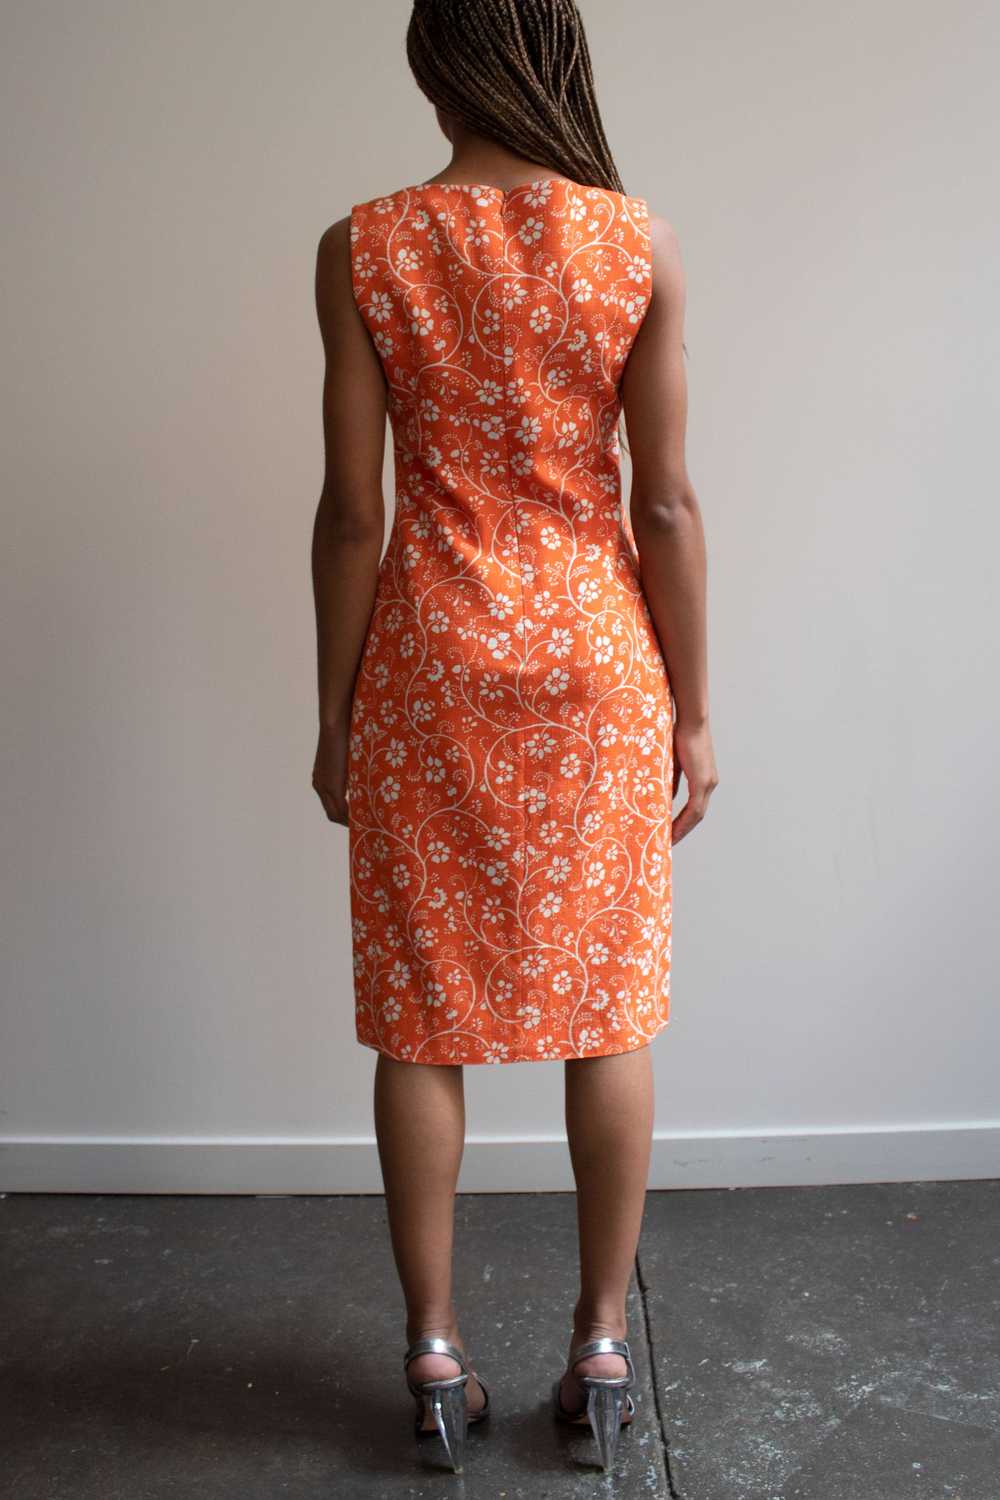 Gianni Versace Orange Cotton blend dress - image 6